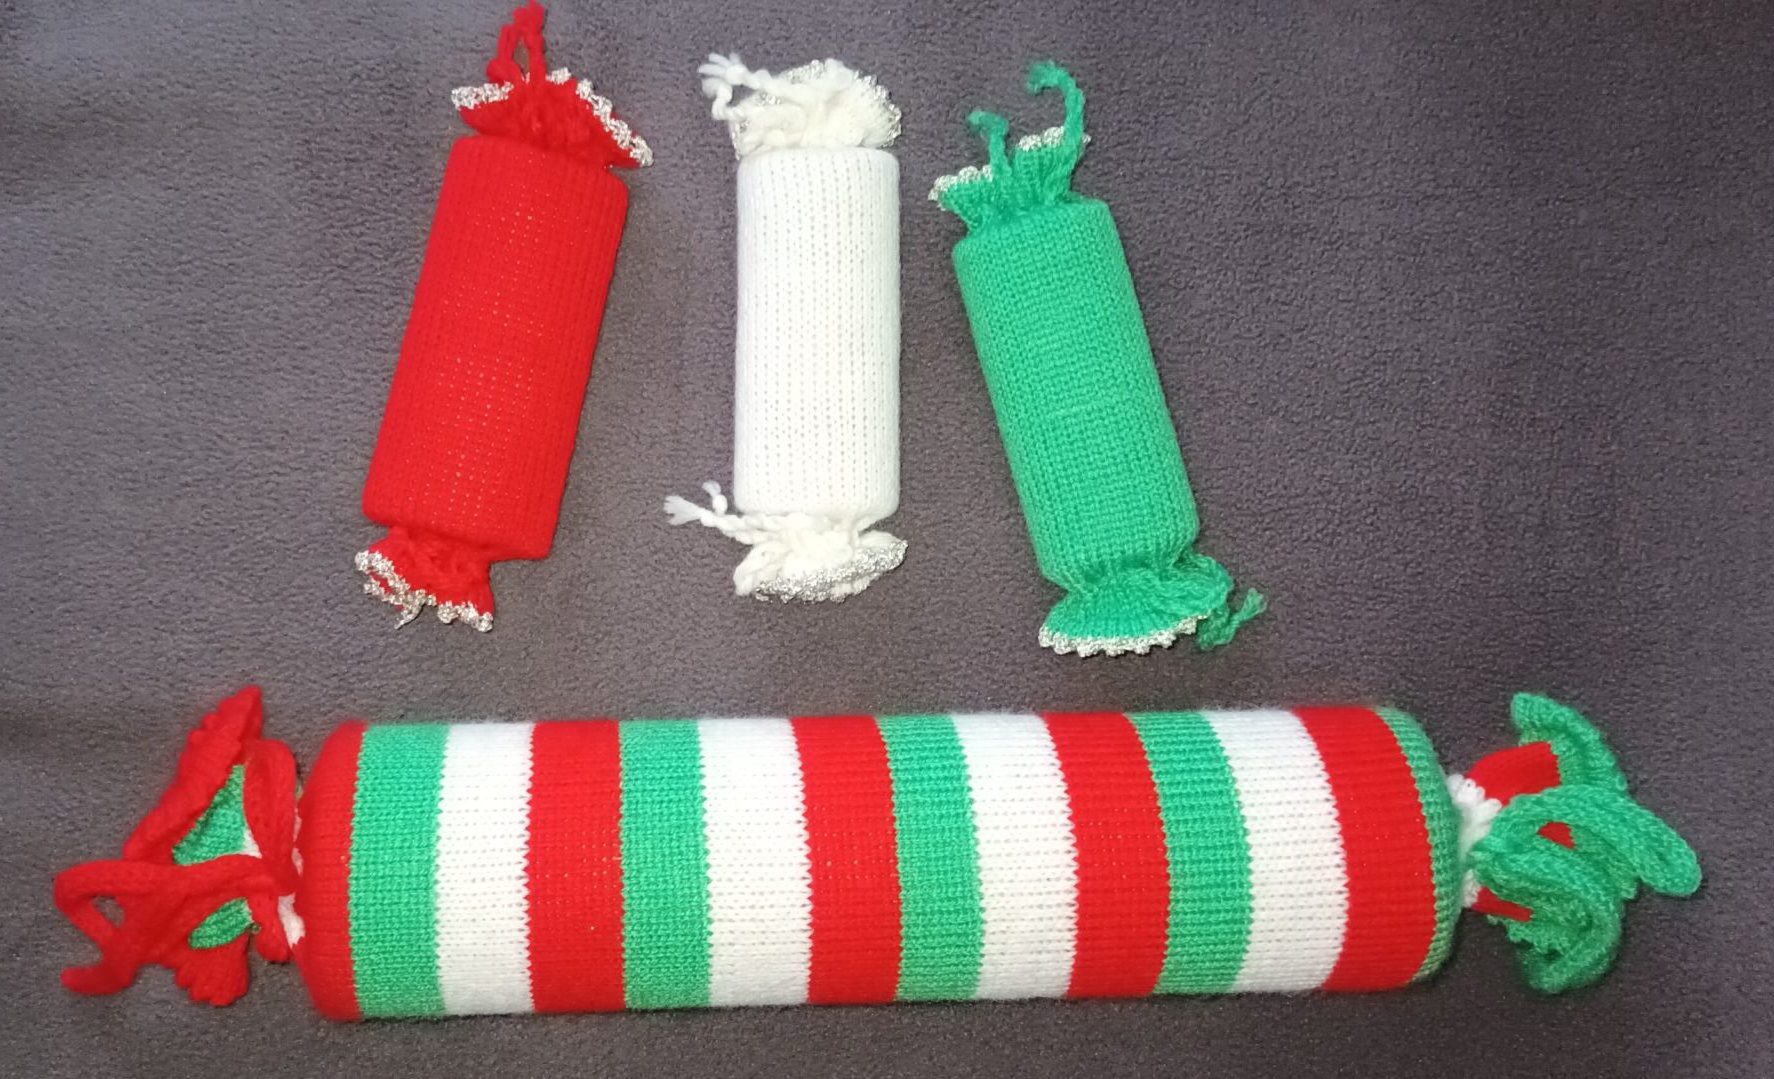 Machine-knitted Christmas crackers